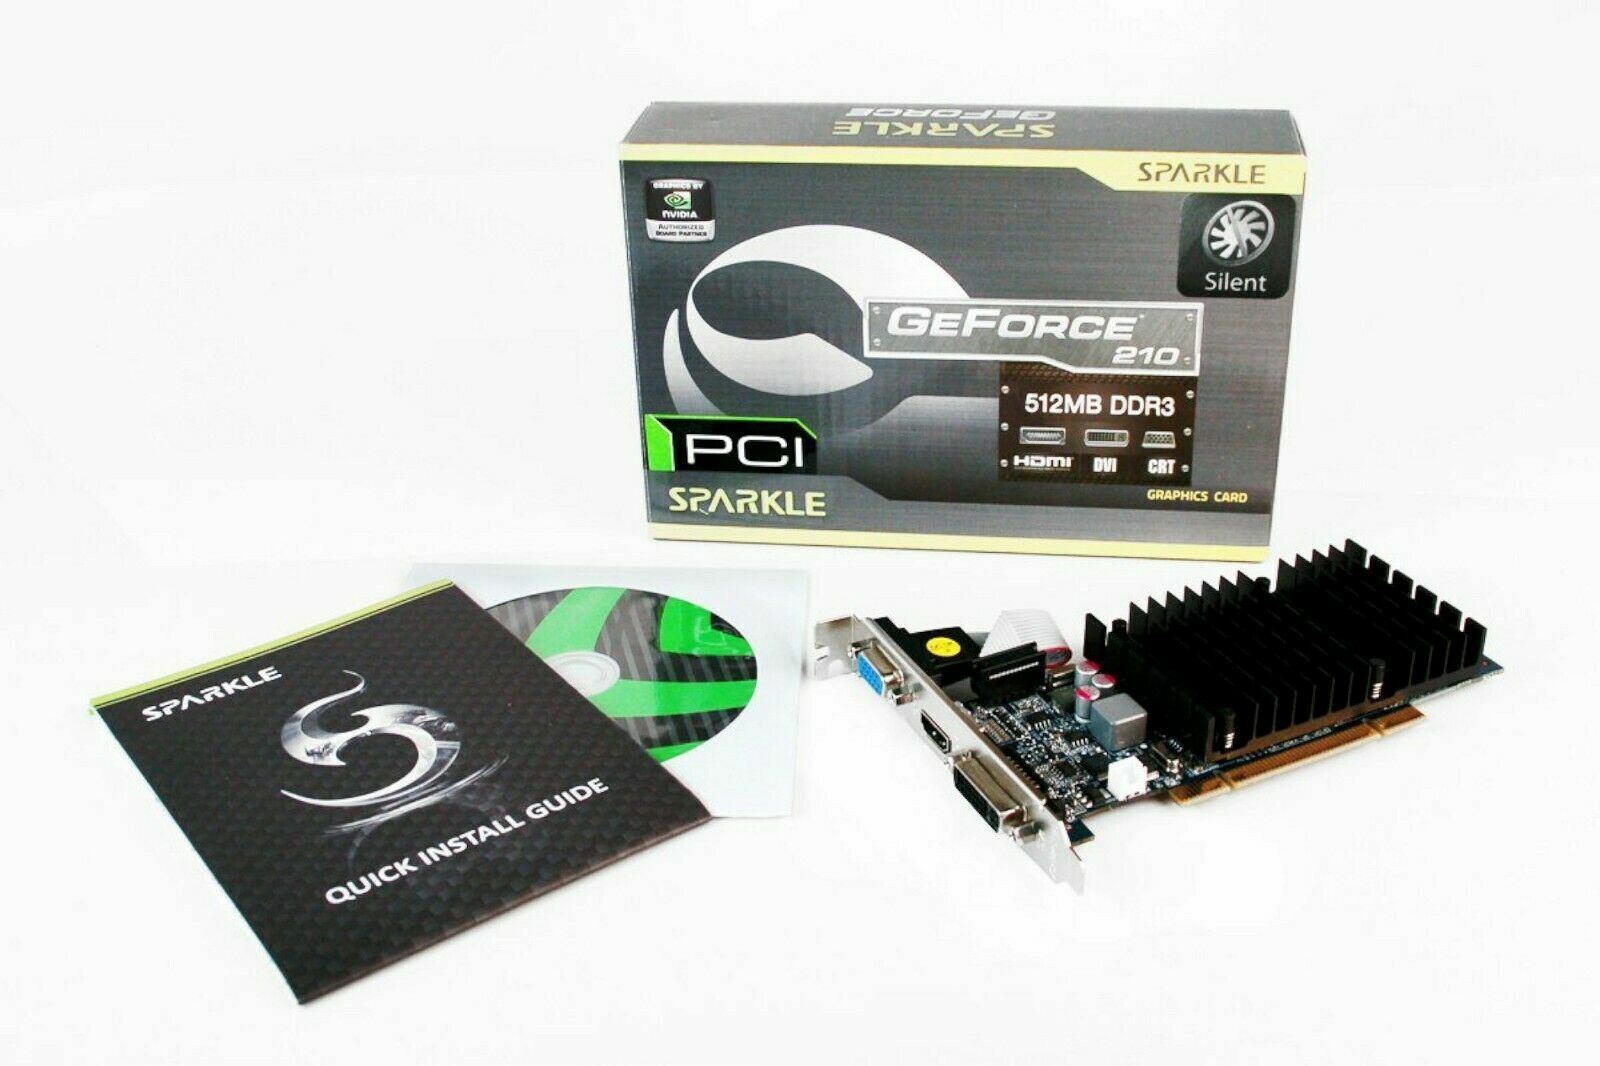 NEW Sparkle 700040 nvidia GeForce 210 512MB DDR3 PCI Graphics Card HDMI DVI